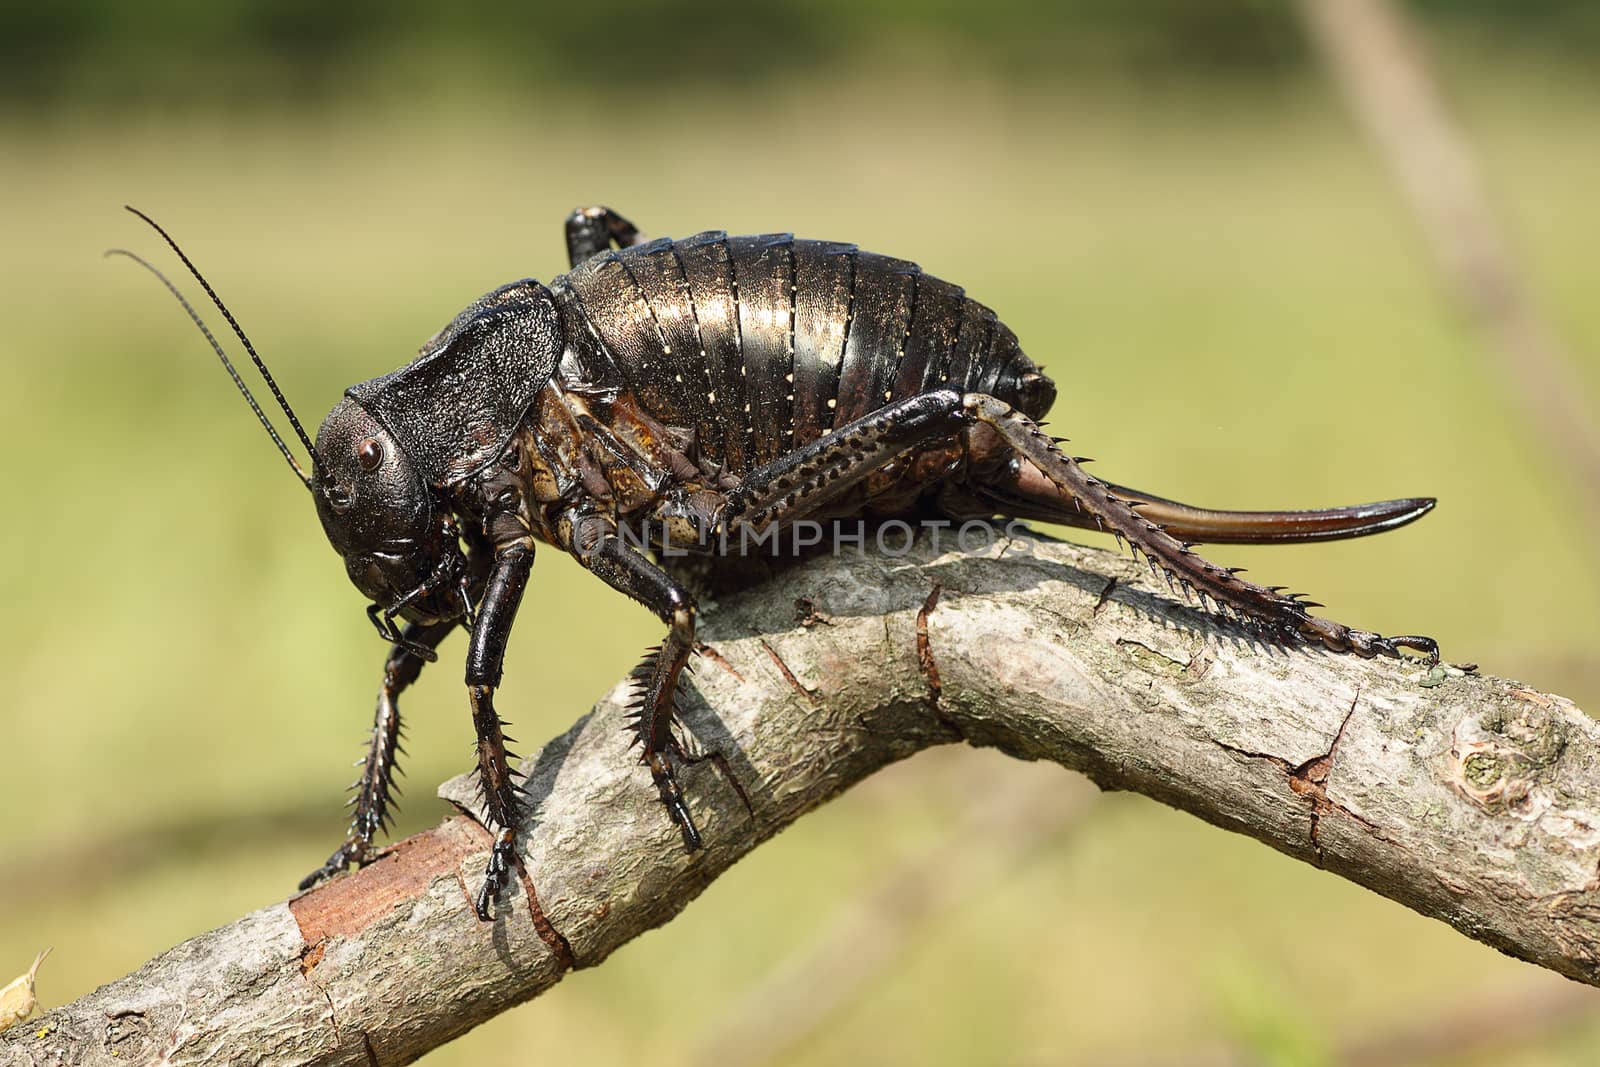 big bellied cricket on twig by taviphoto